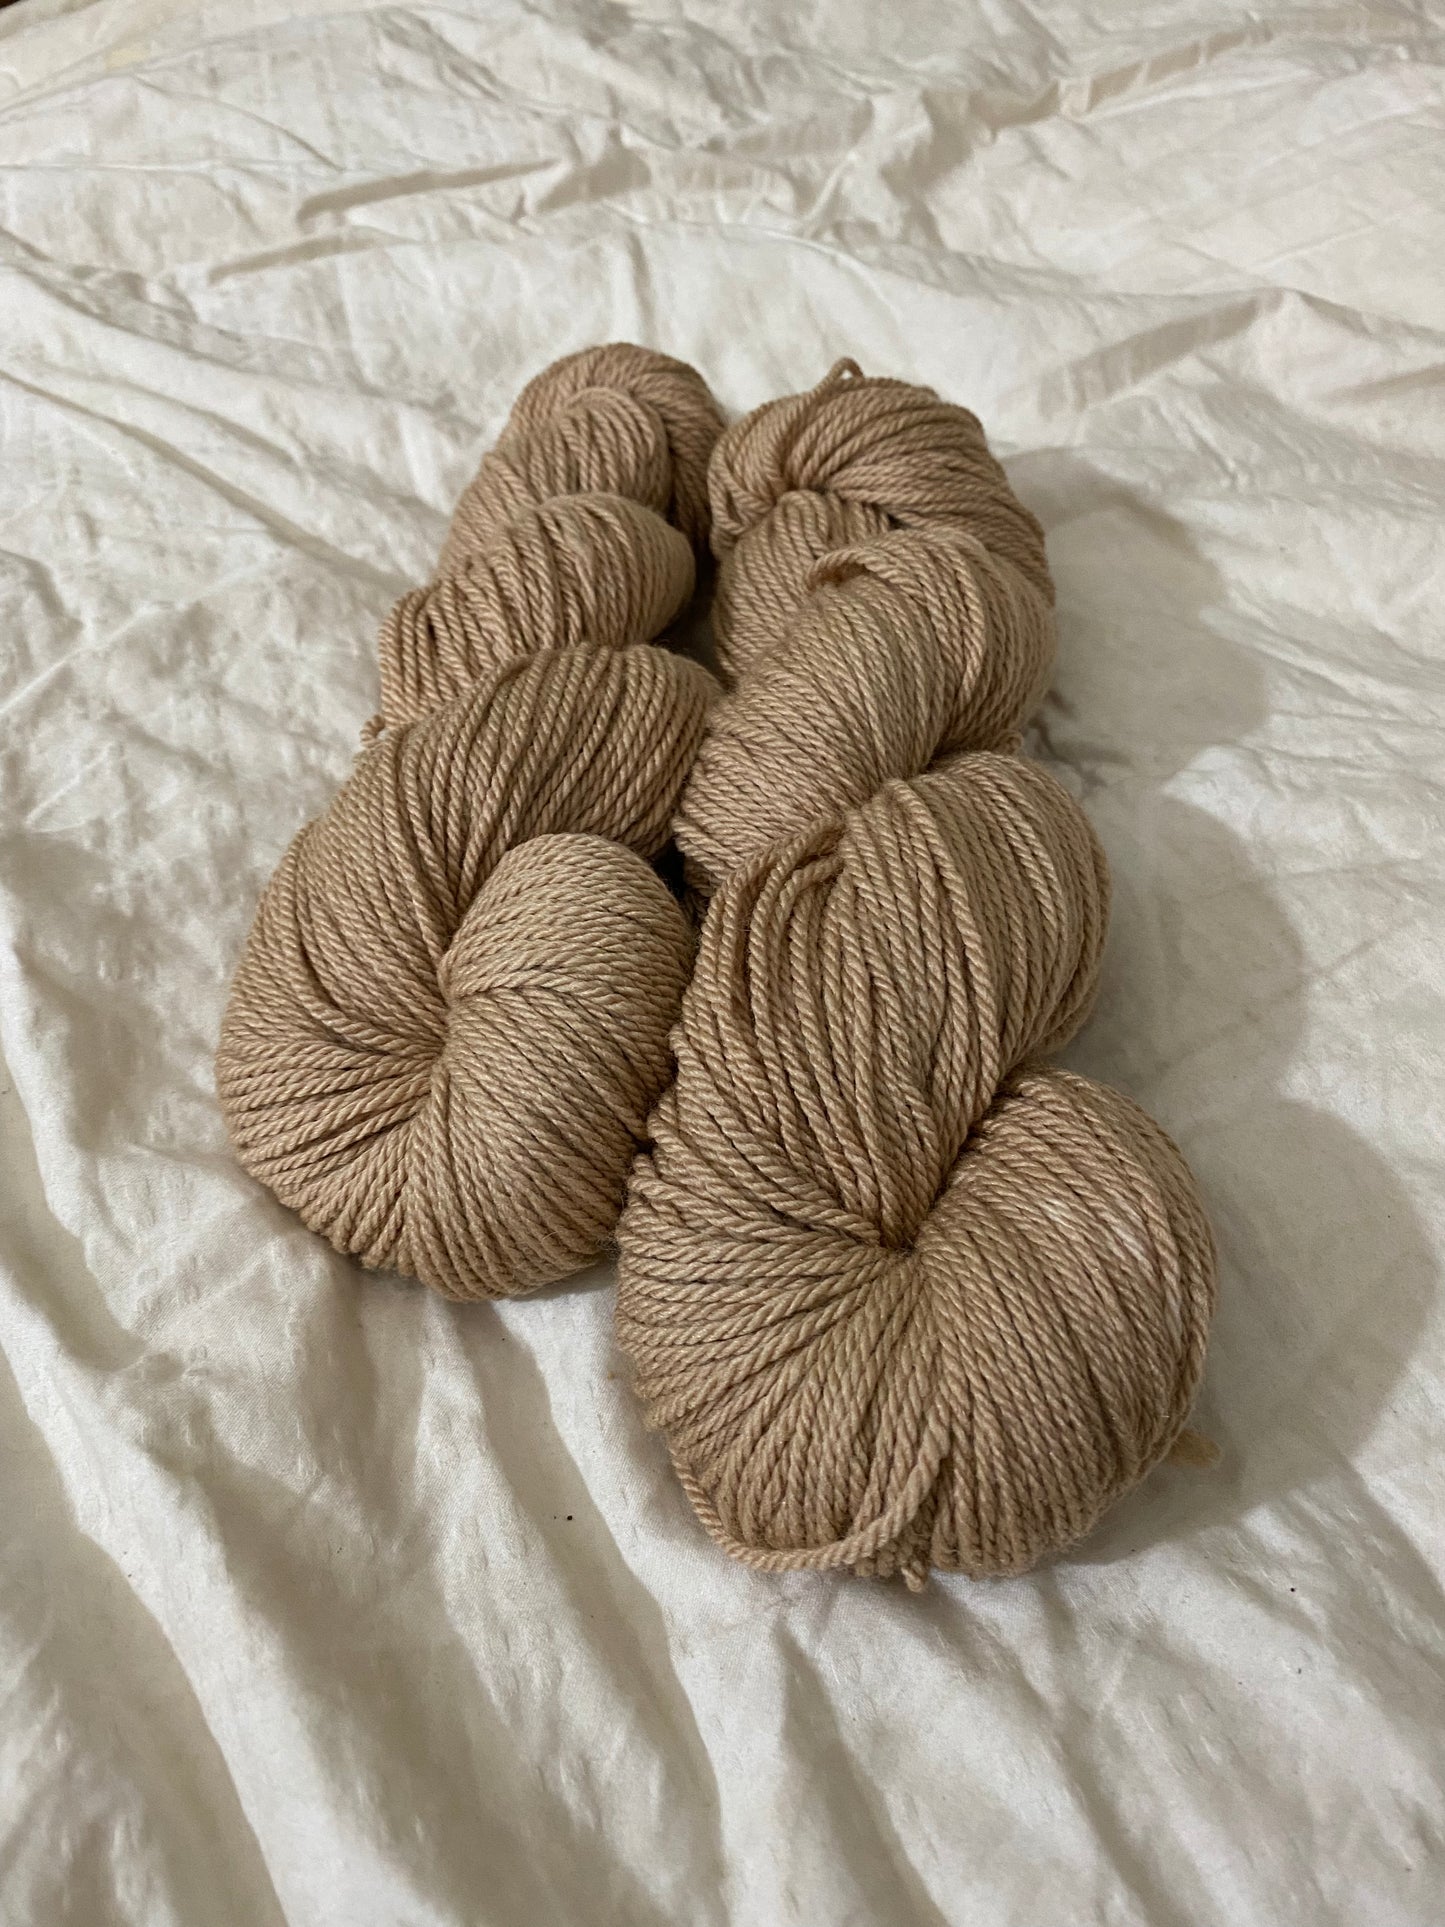 30/70 Merino/ Silk DK Weight Yarn - Sumac Rosewood